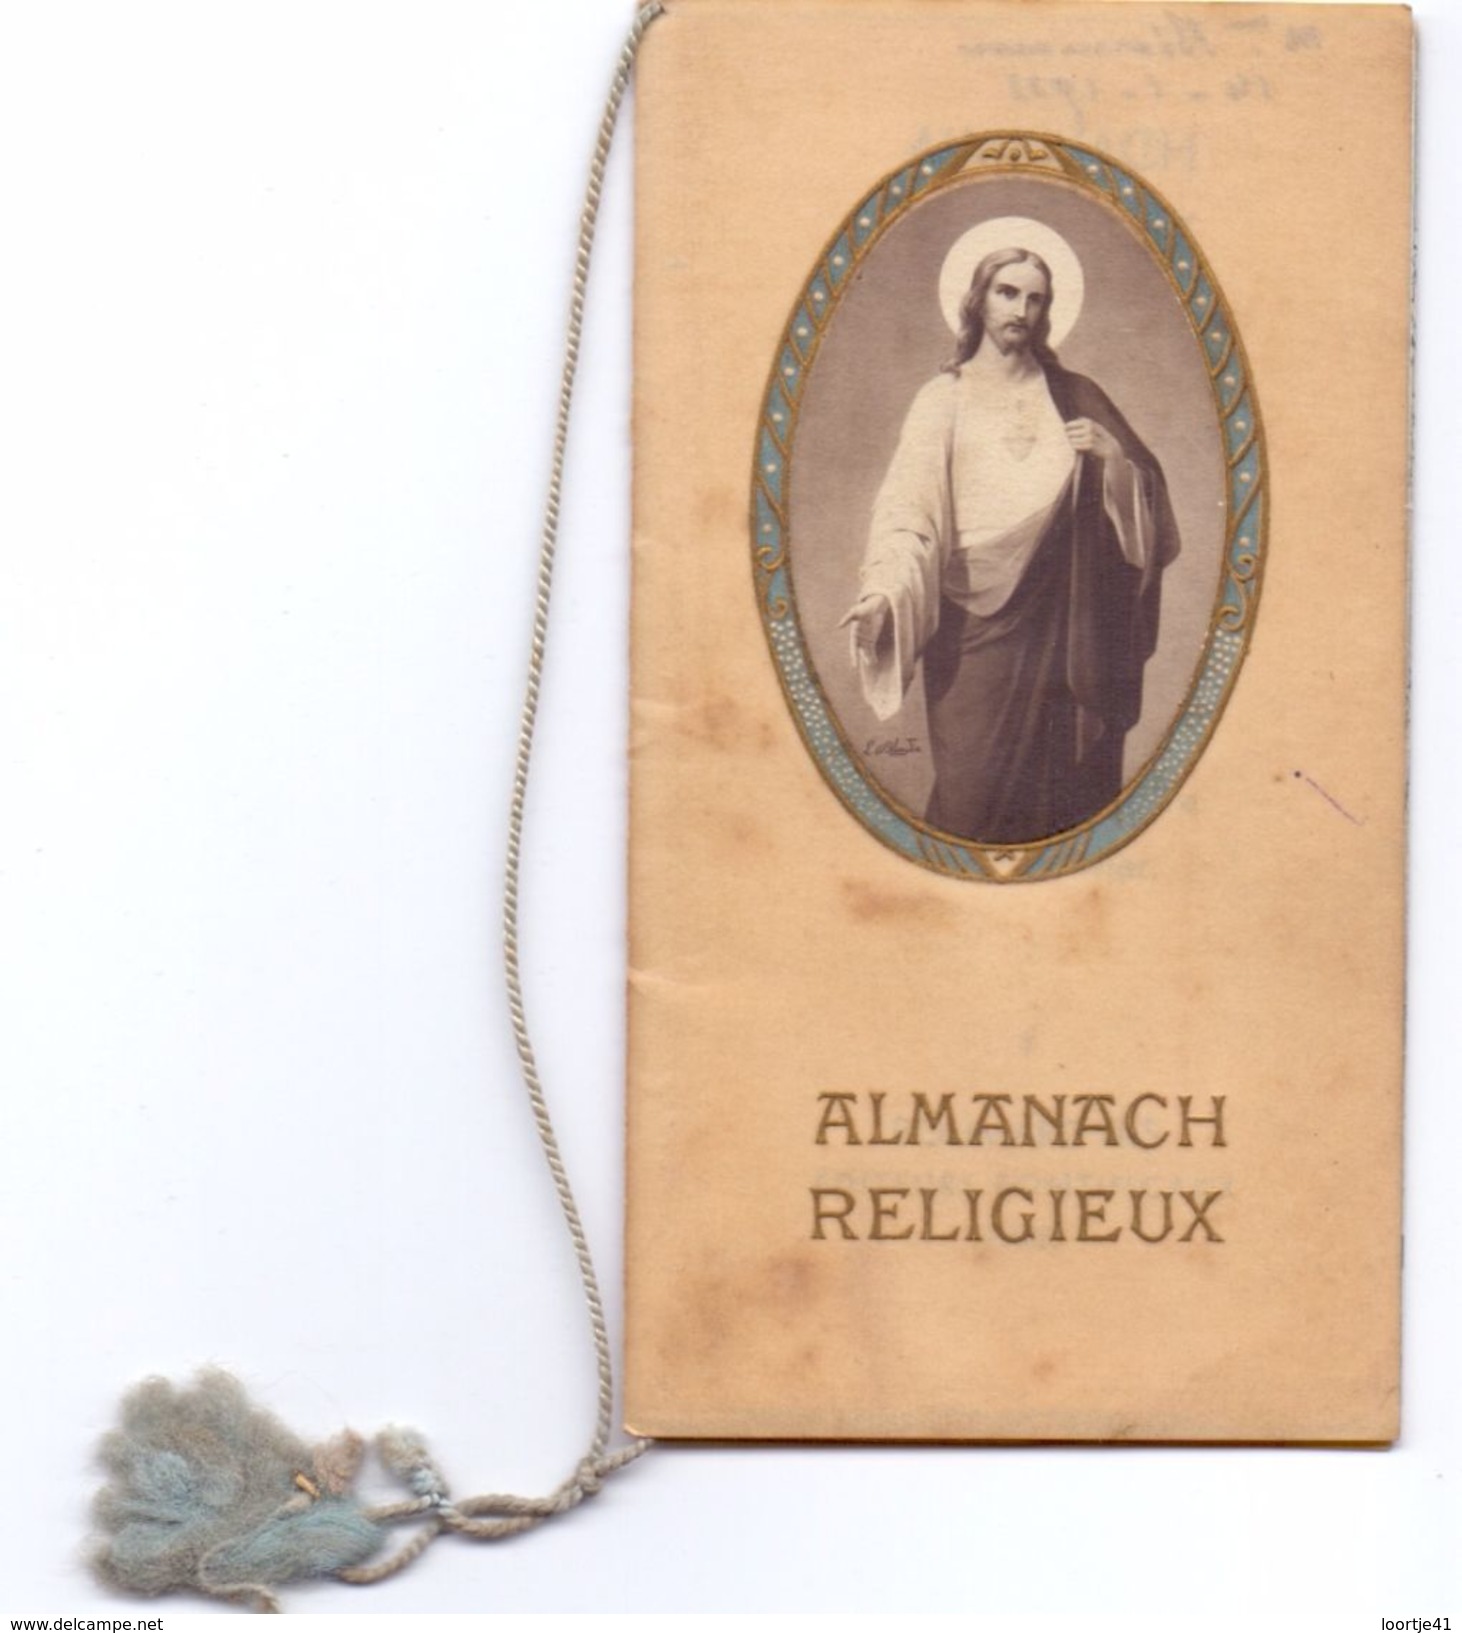 Almanach Religieux Almanak Kalender Calendrier 1933 - Small : 1921-40